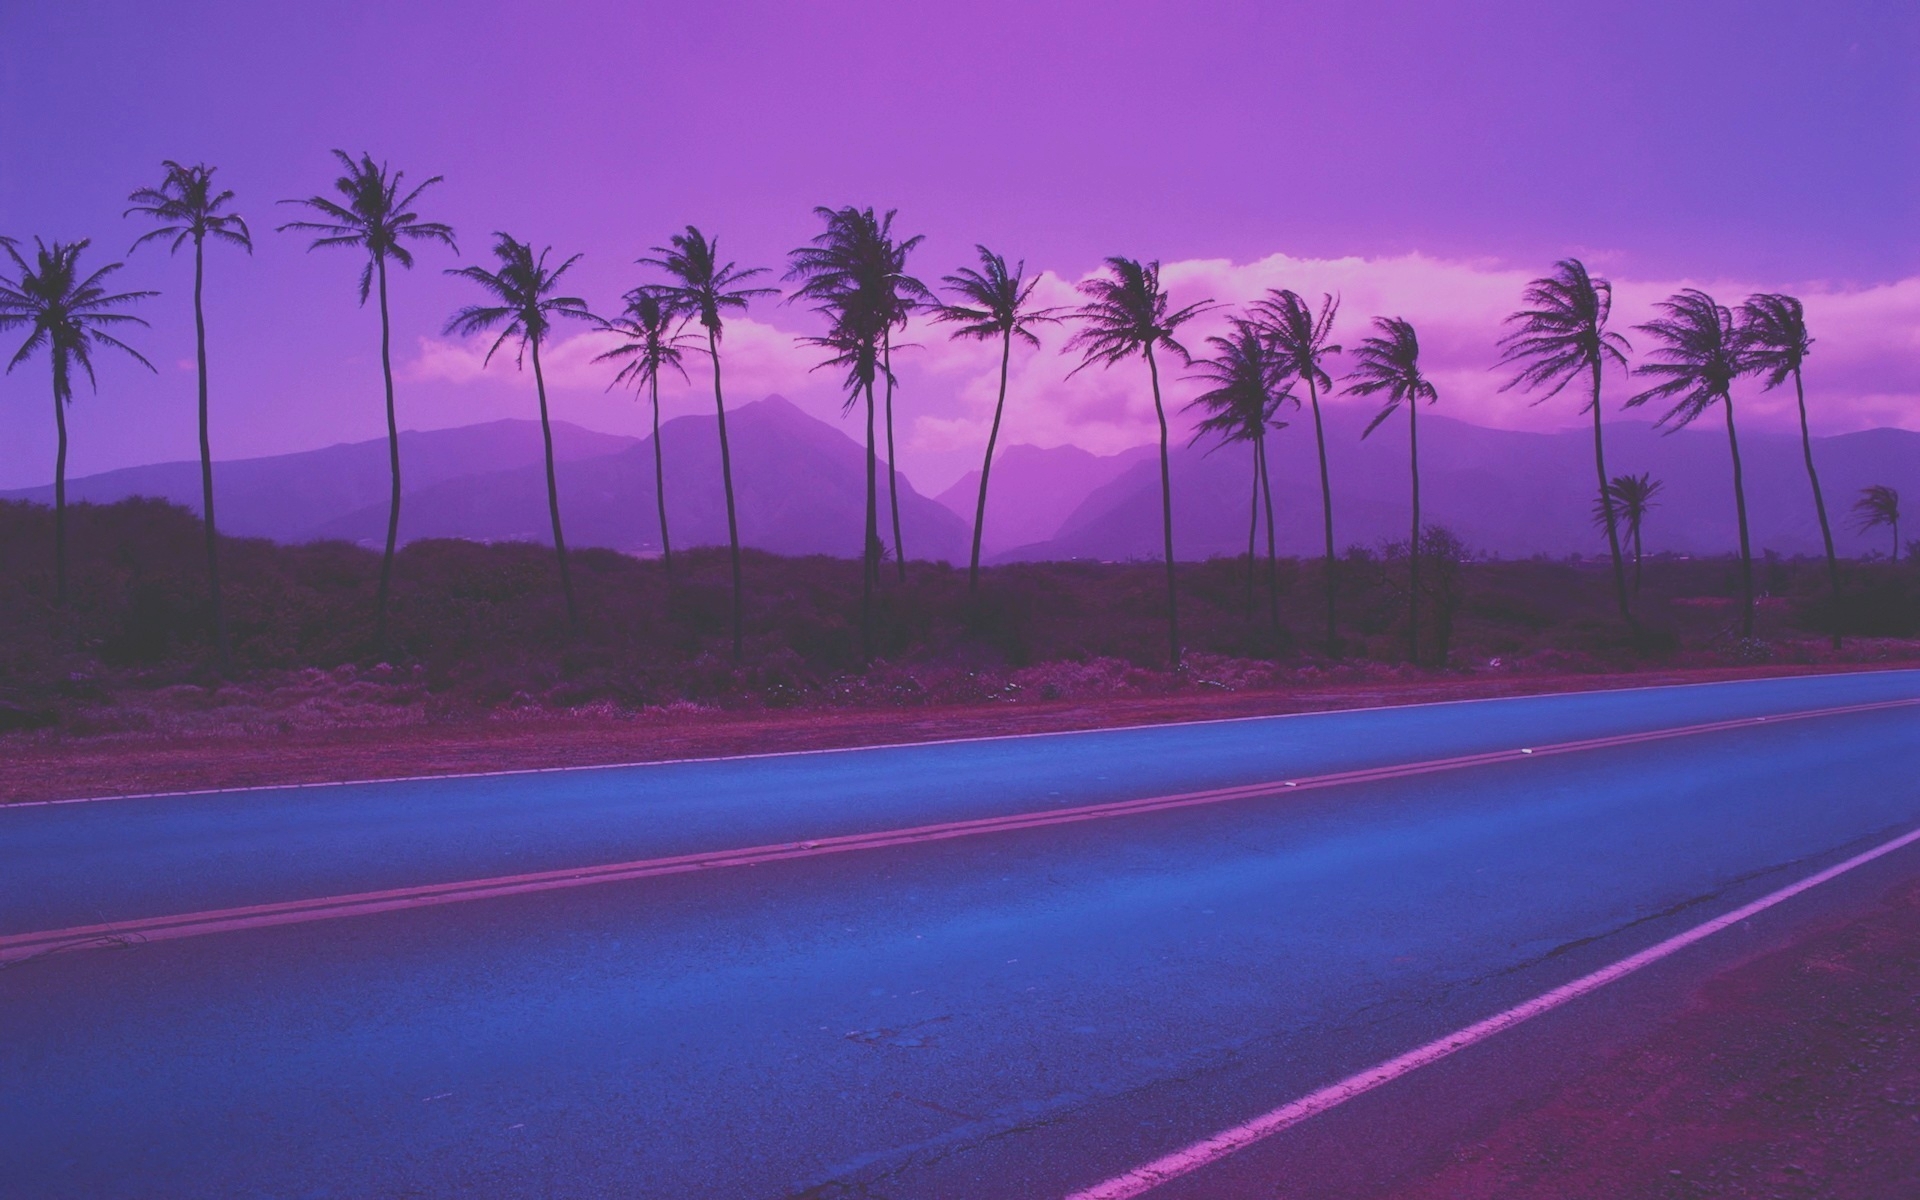 vaporwave壁紙,空,紫の,木,道路,バイオレット